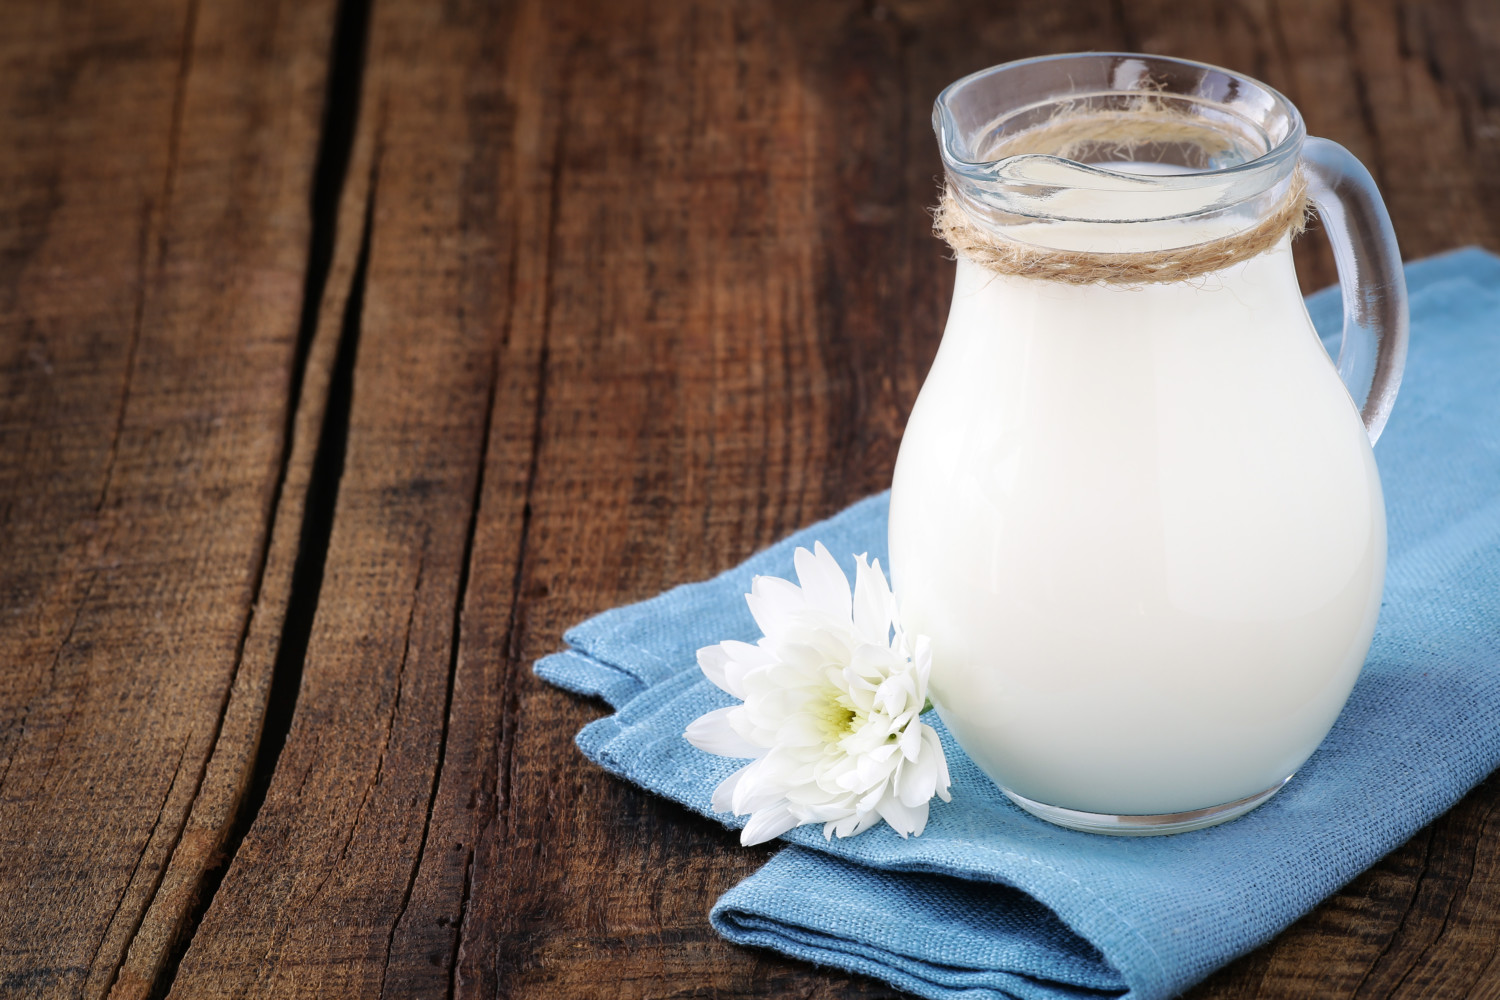 Heavy cream or milk in glass jug